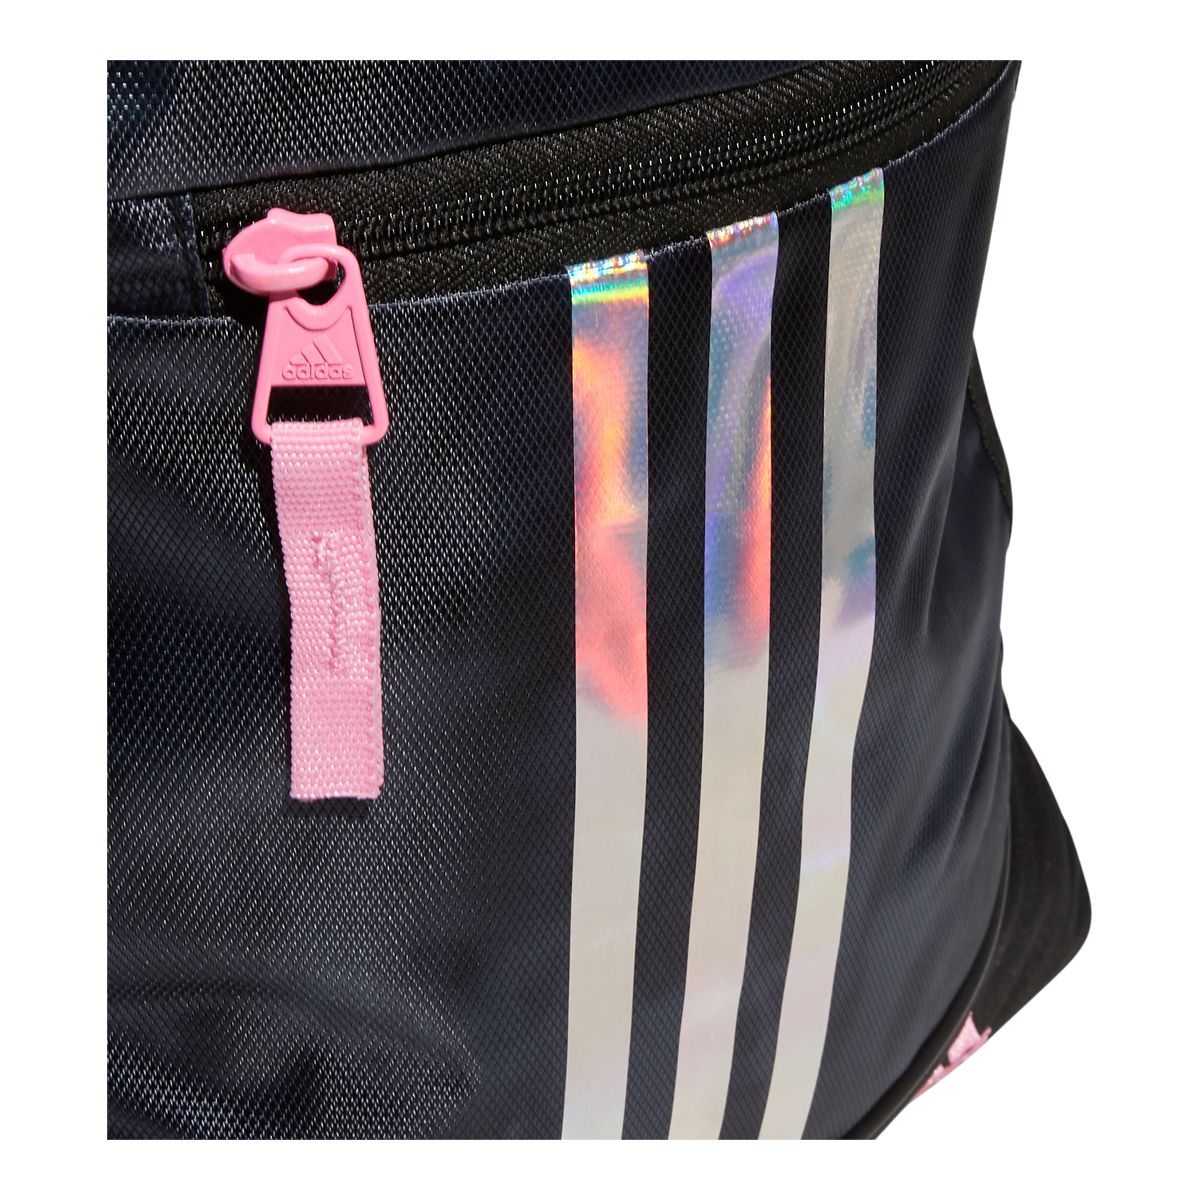 adidas Alliance II Sackpack/Drawstring Bag